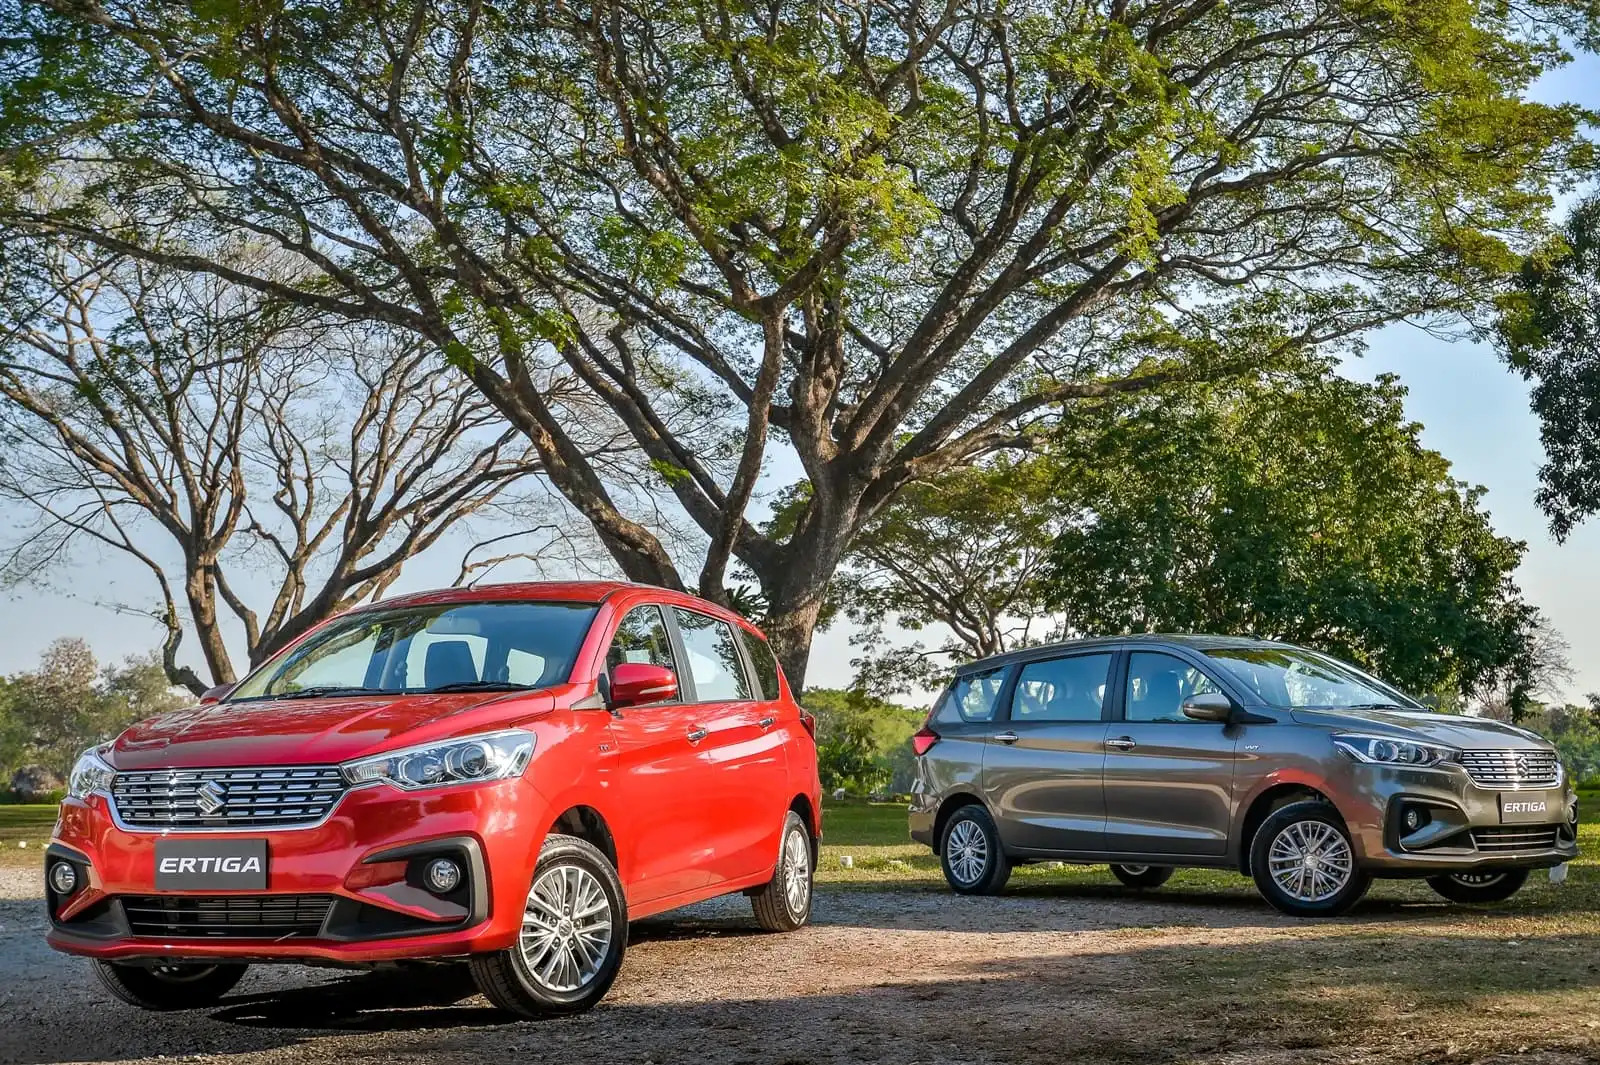 Produk Buatan Dalam Negeri Dominasi Penjualan Suzuki Tahun 2020